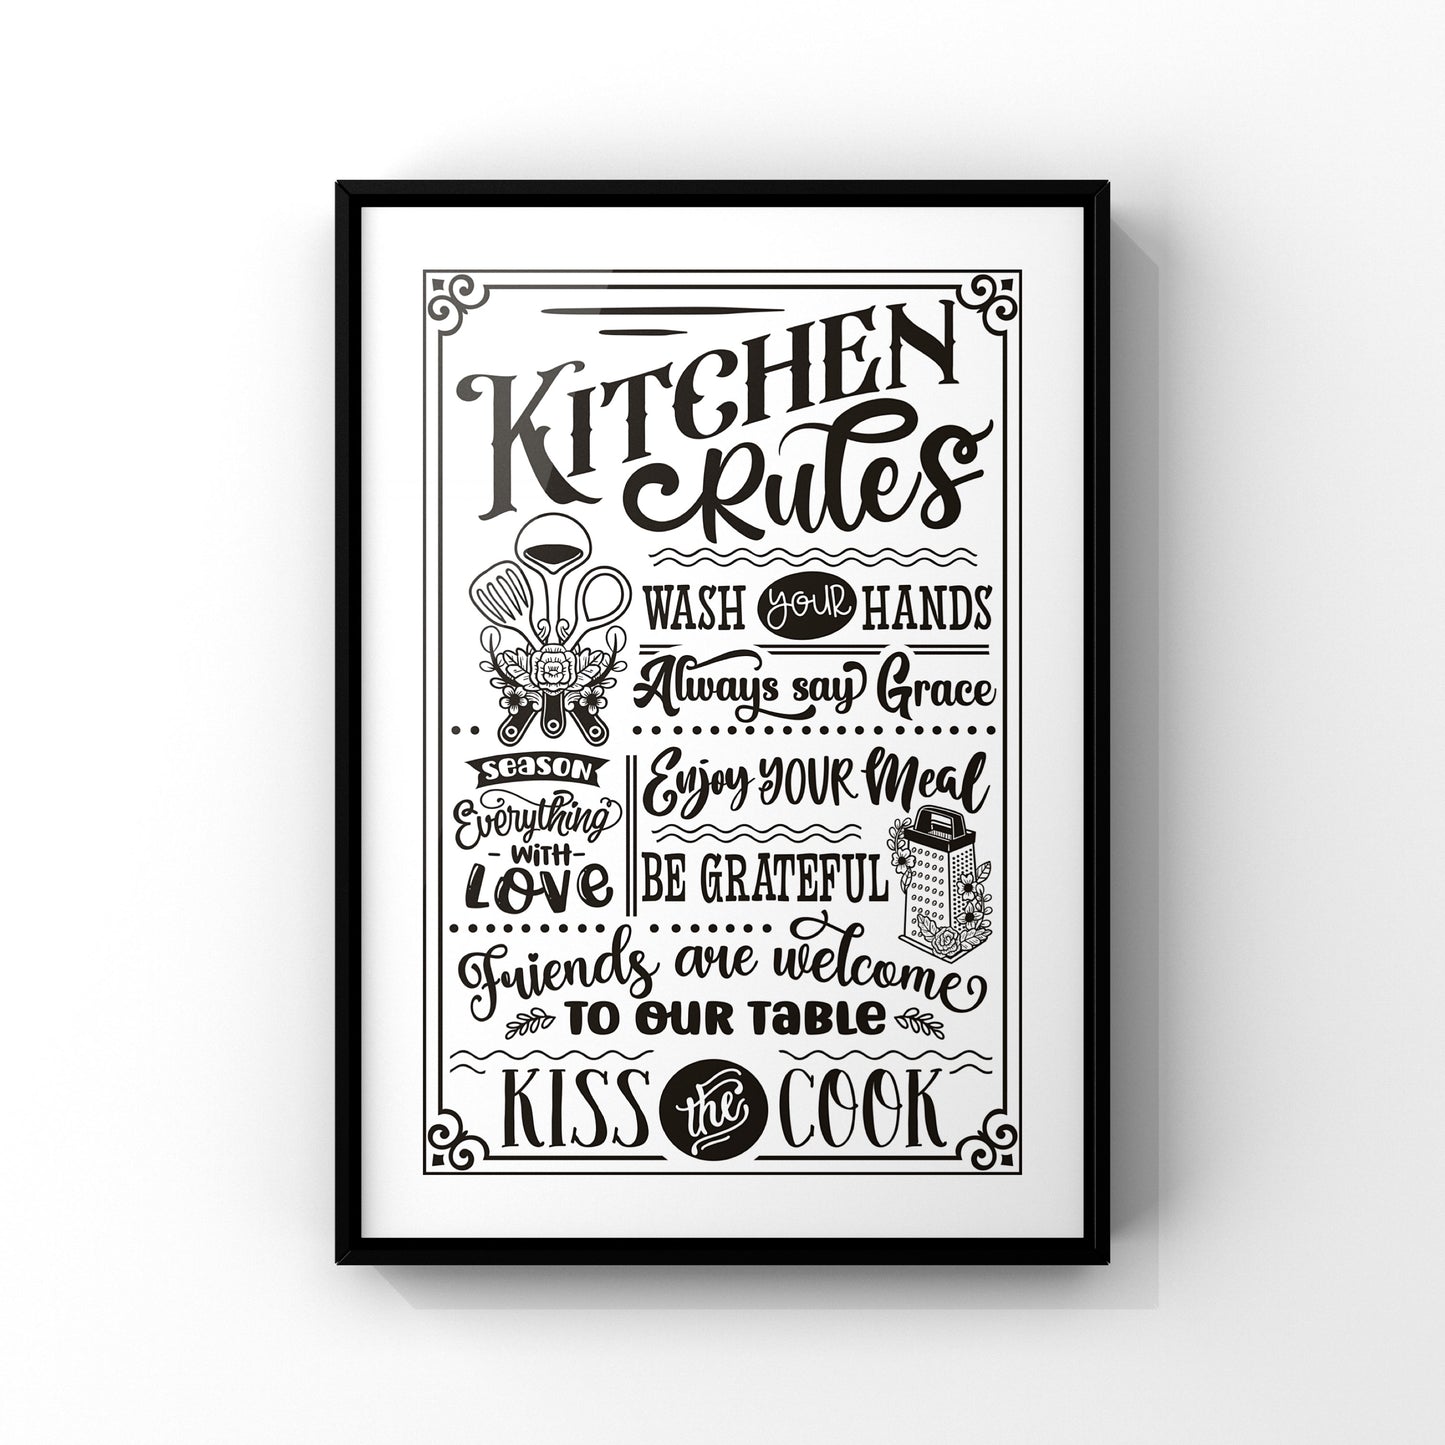 Kitchen rules 2